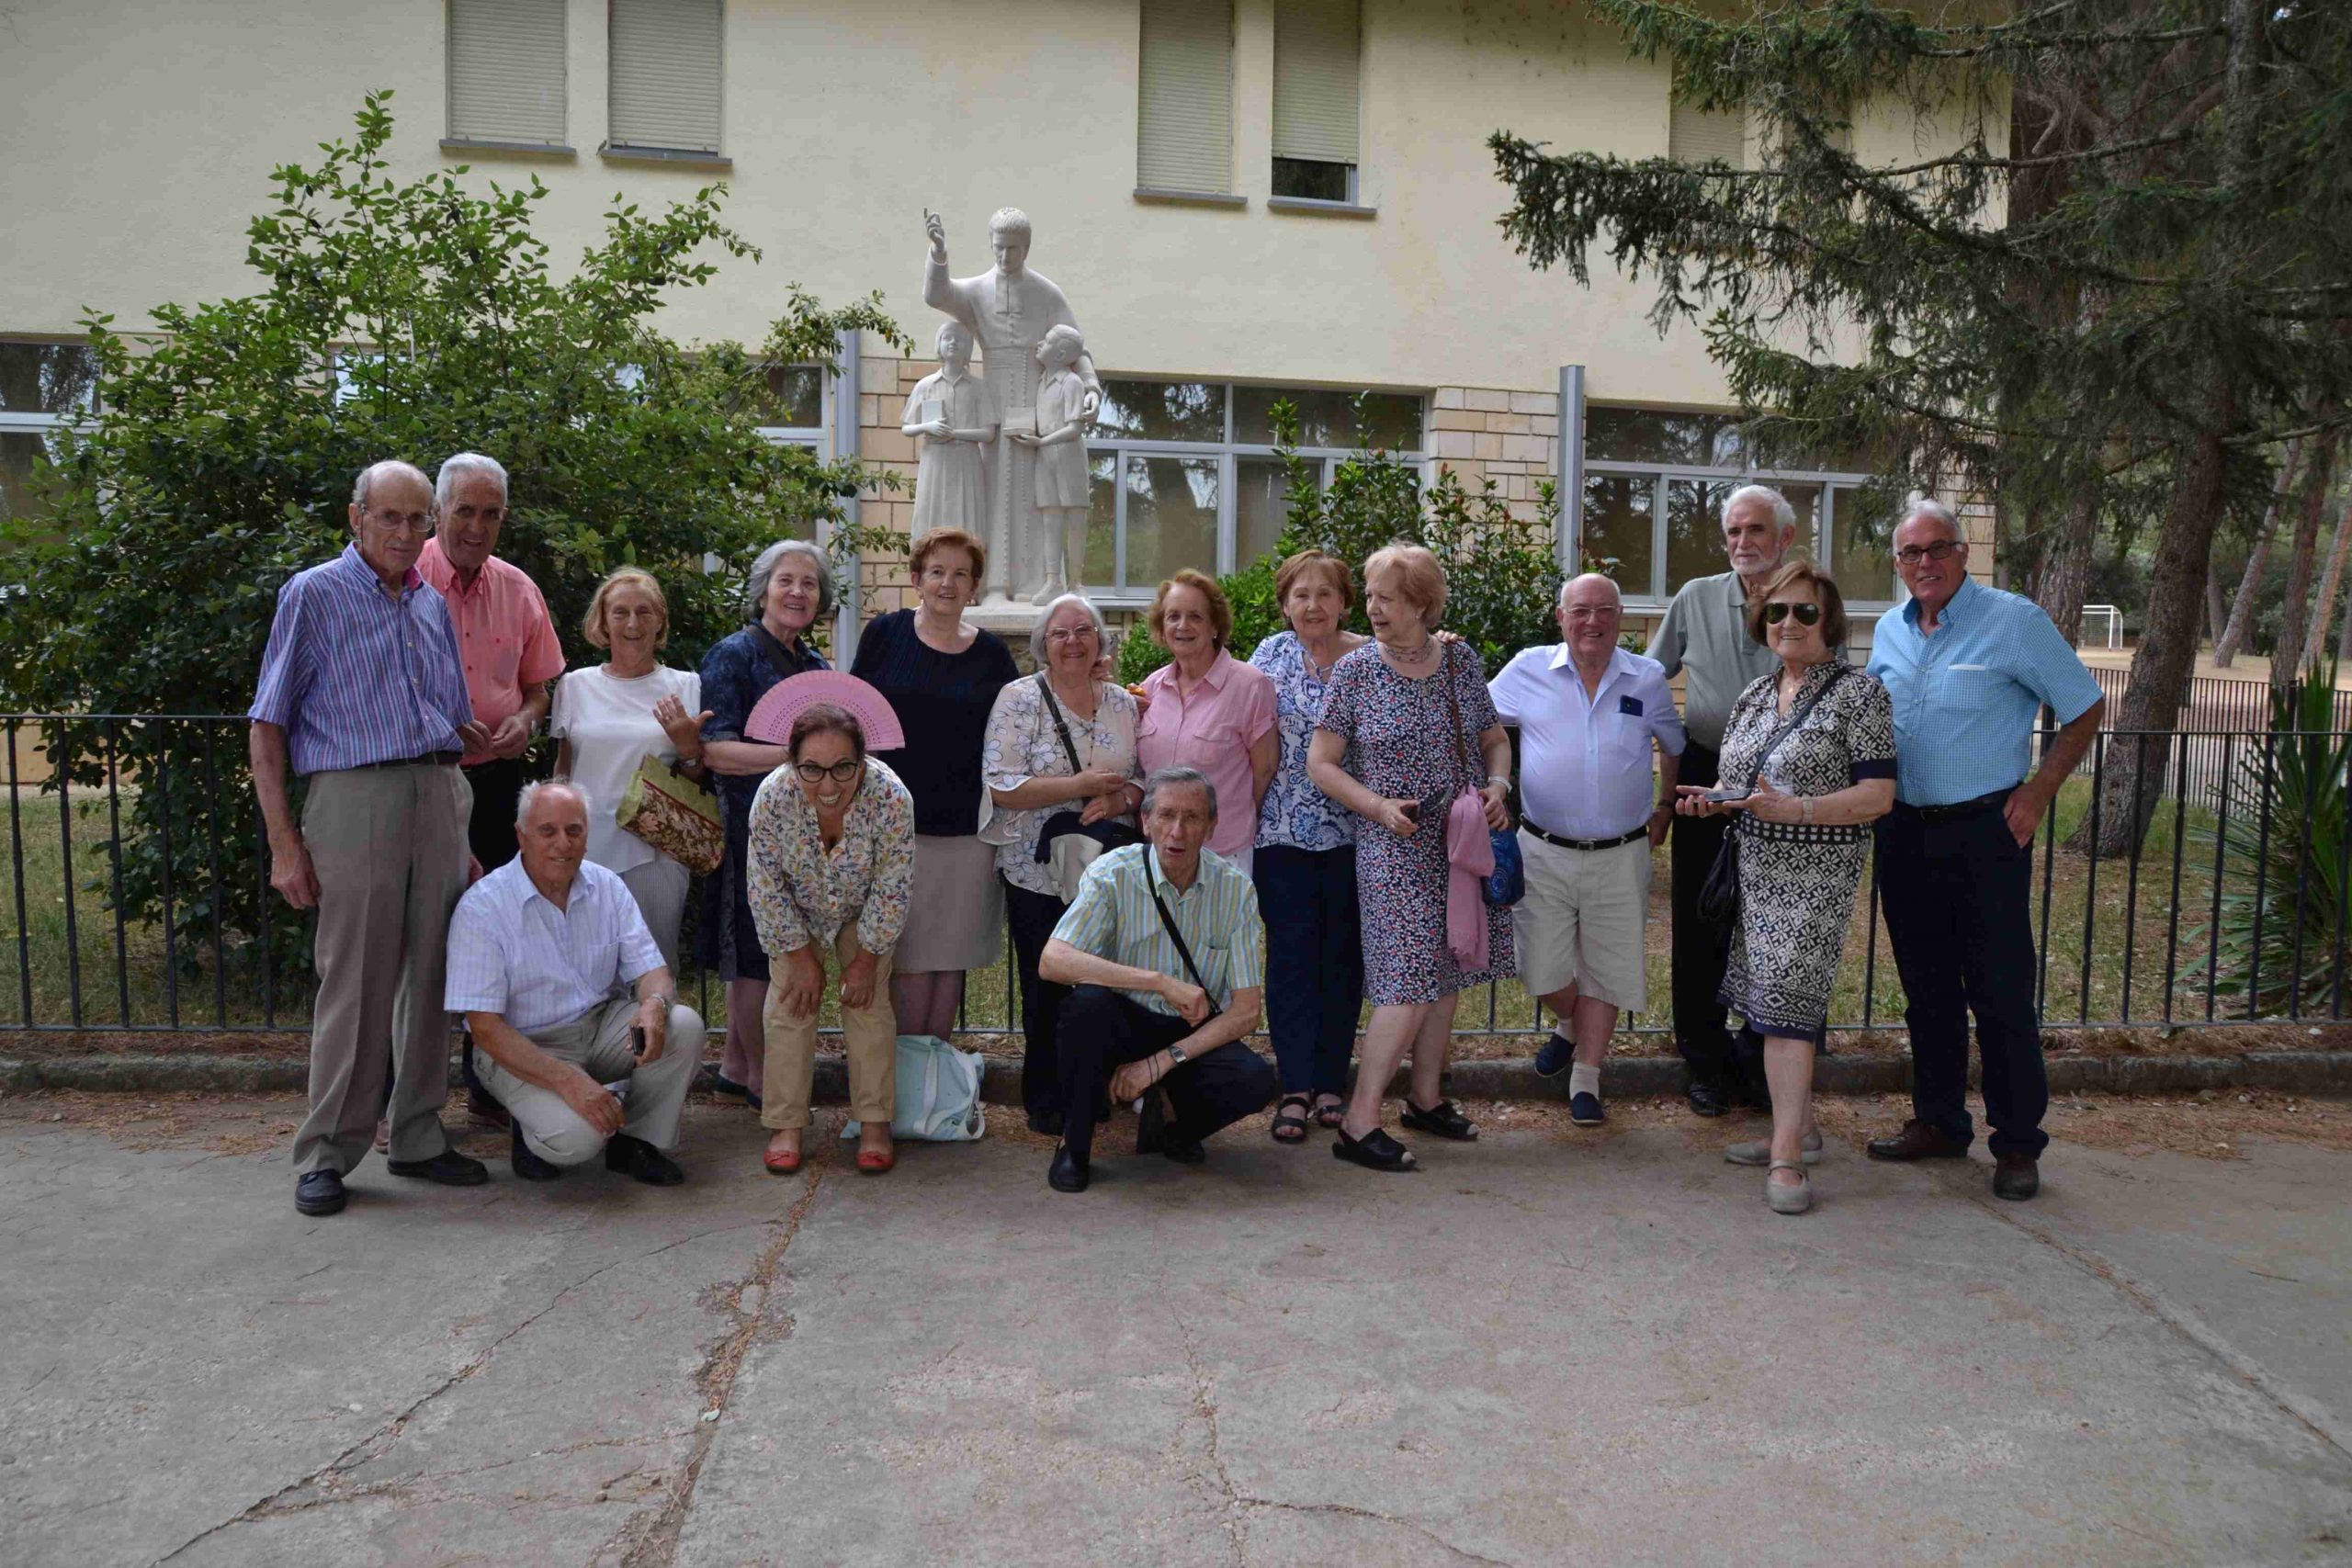 Province of Spain – Meeting of Associates in Aranda De Duero